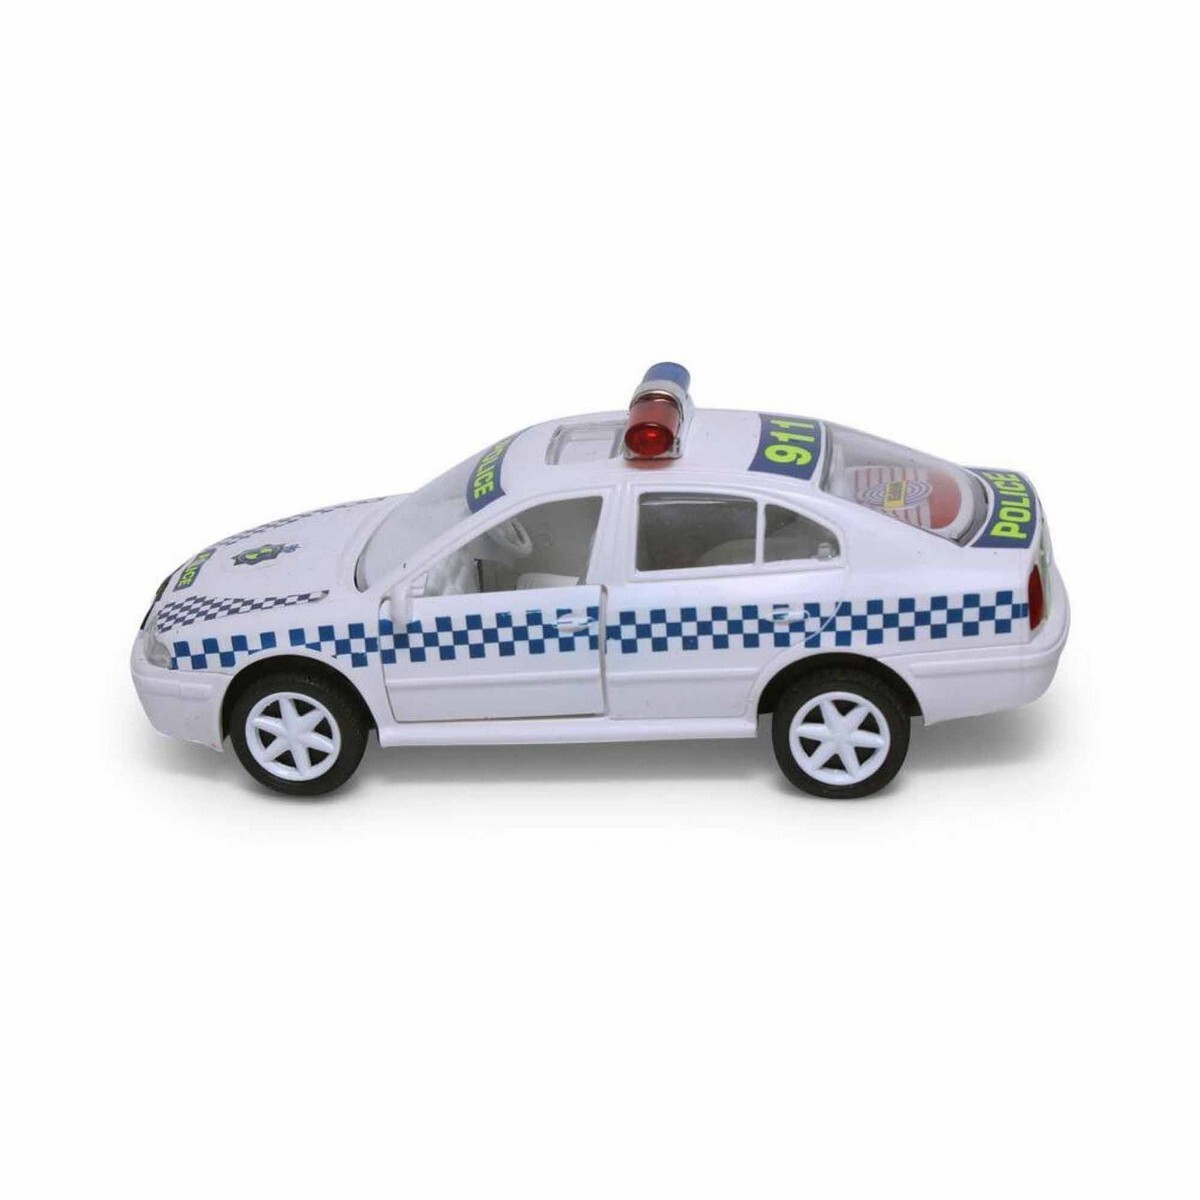 Merry Kids Australian Police Ct152